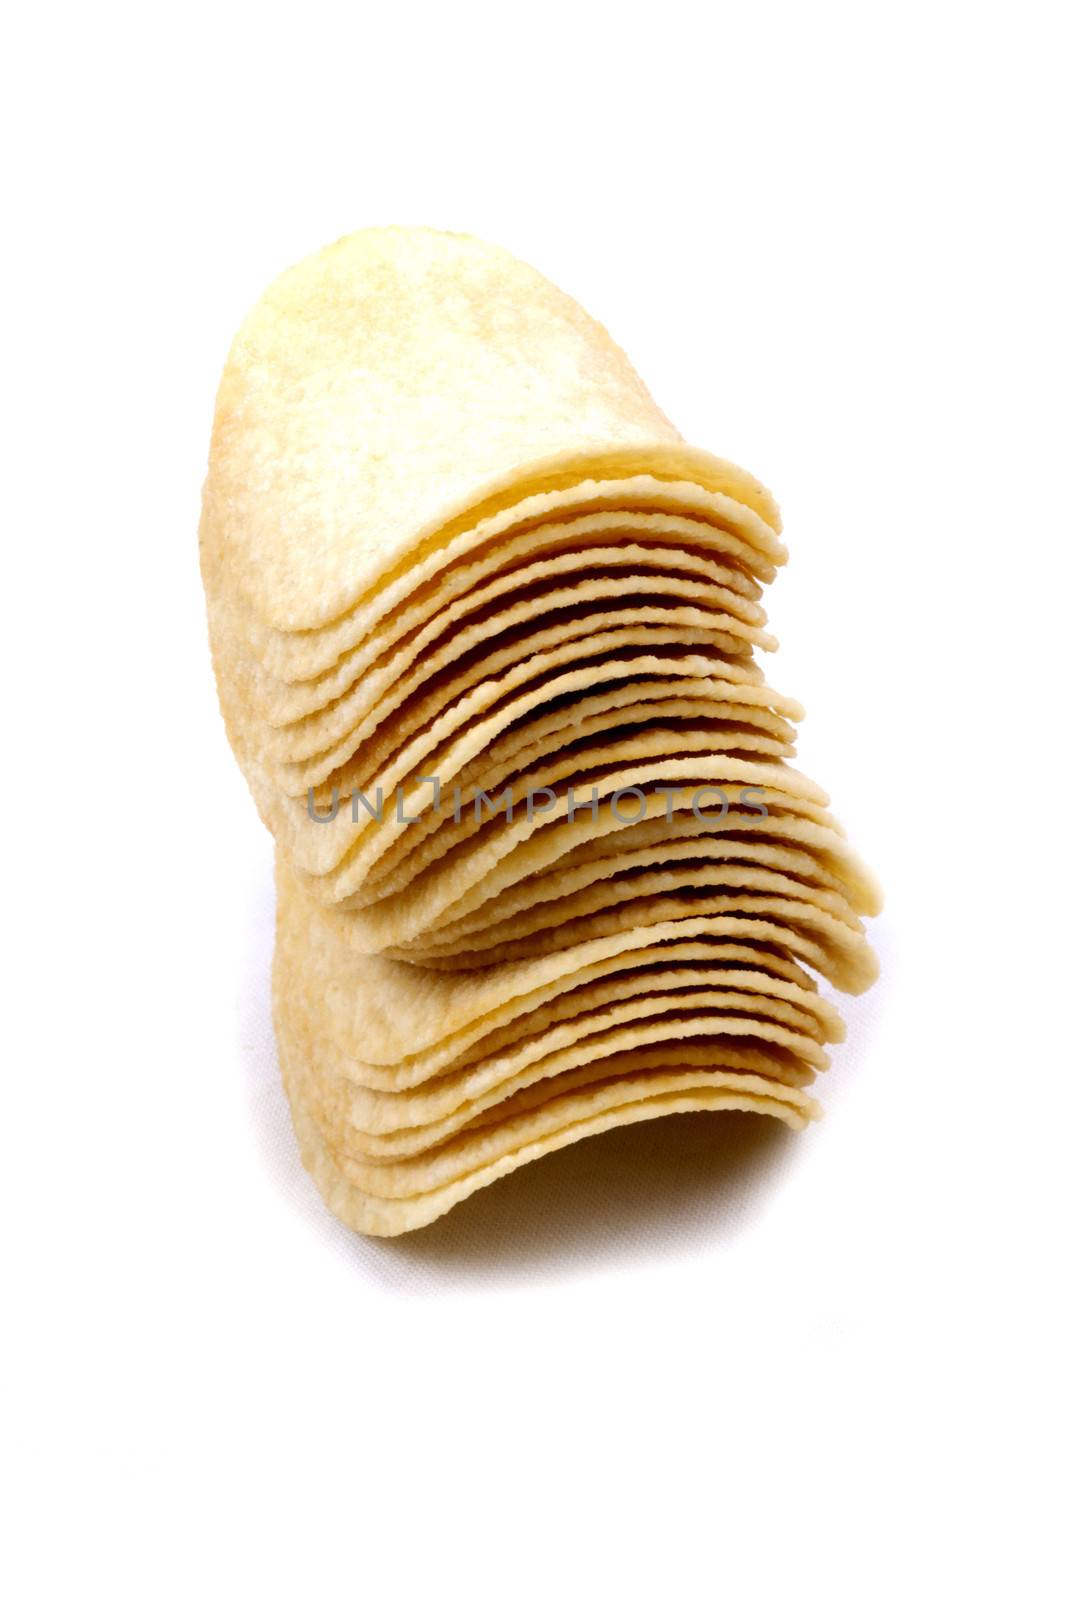 Tasty potato crisps (chips) isolated on a white background